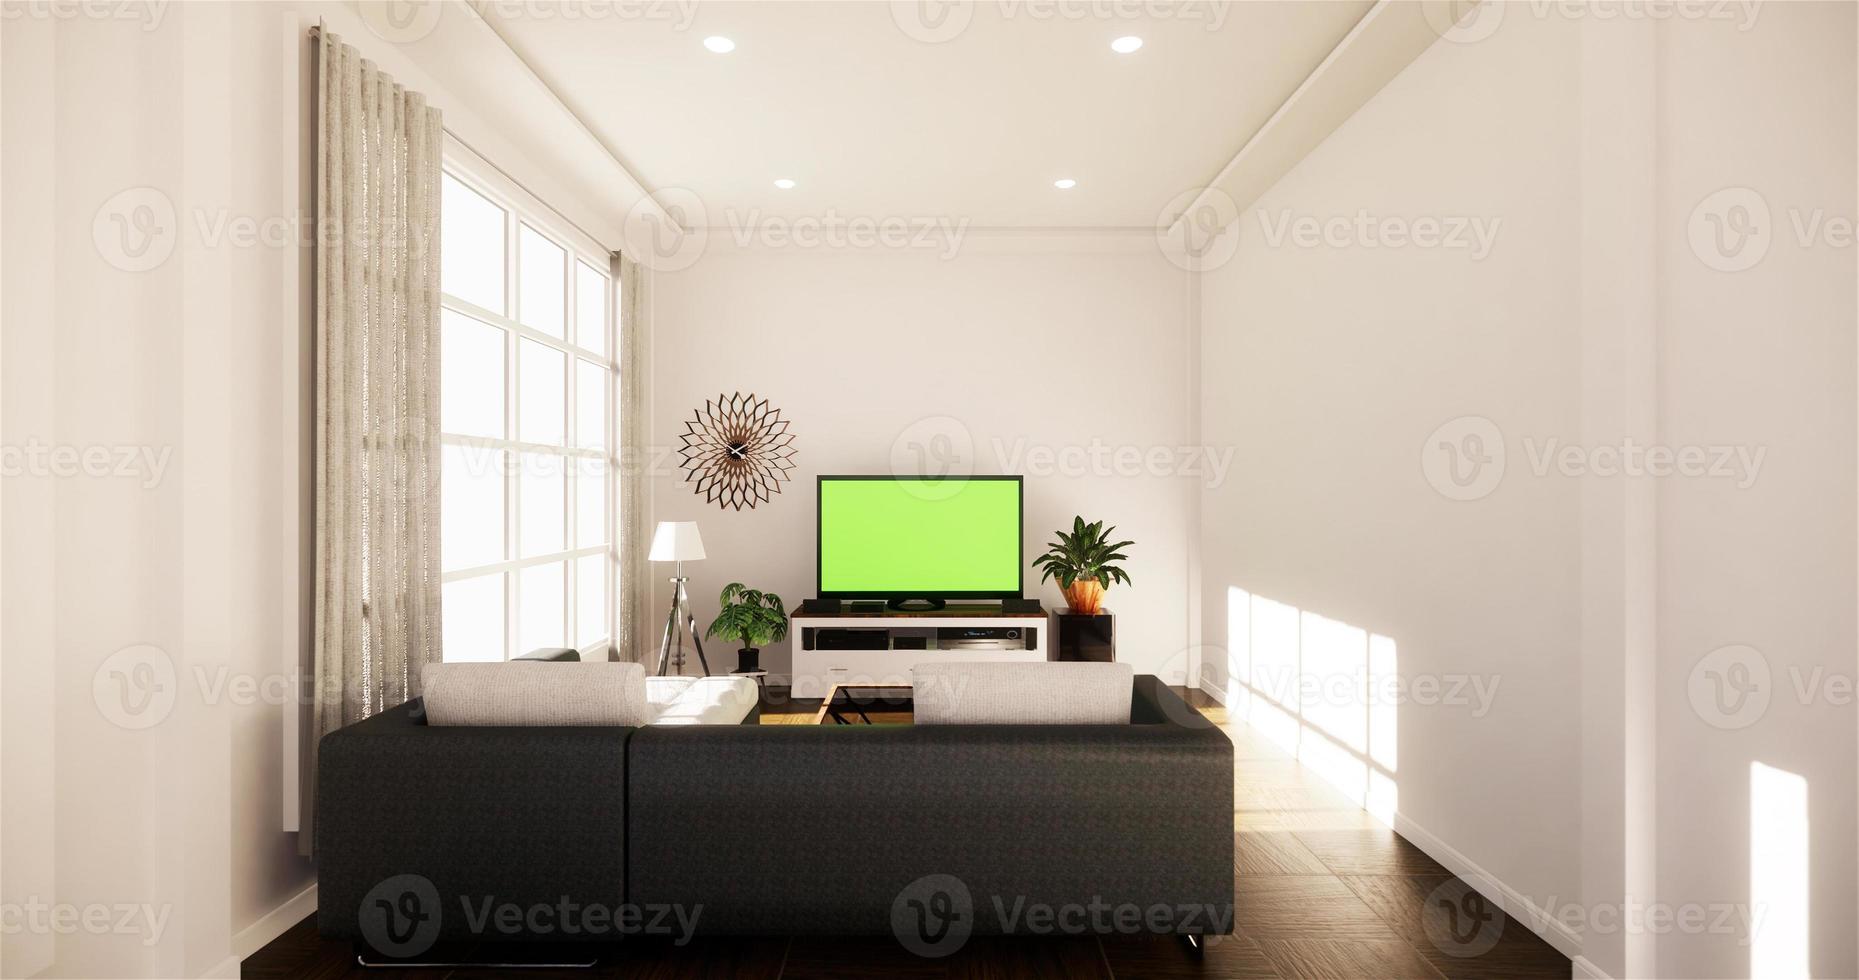 smart tv-mockup med tom svart skärm hängande på skåpets inredning, modernt vardagsrum i zen-stil. 3d-rendering foto